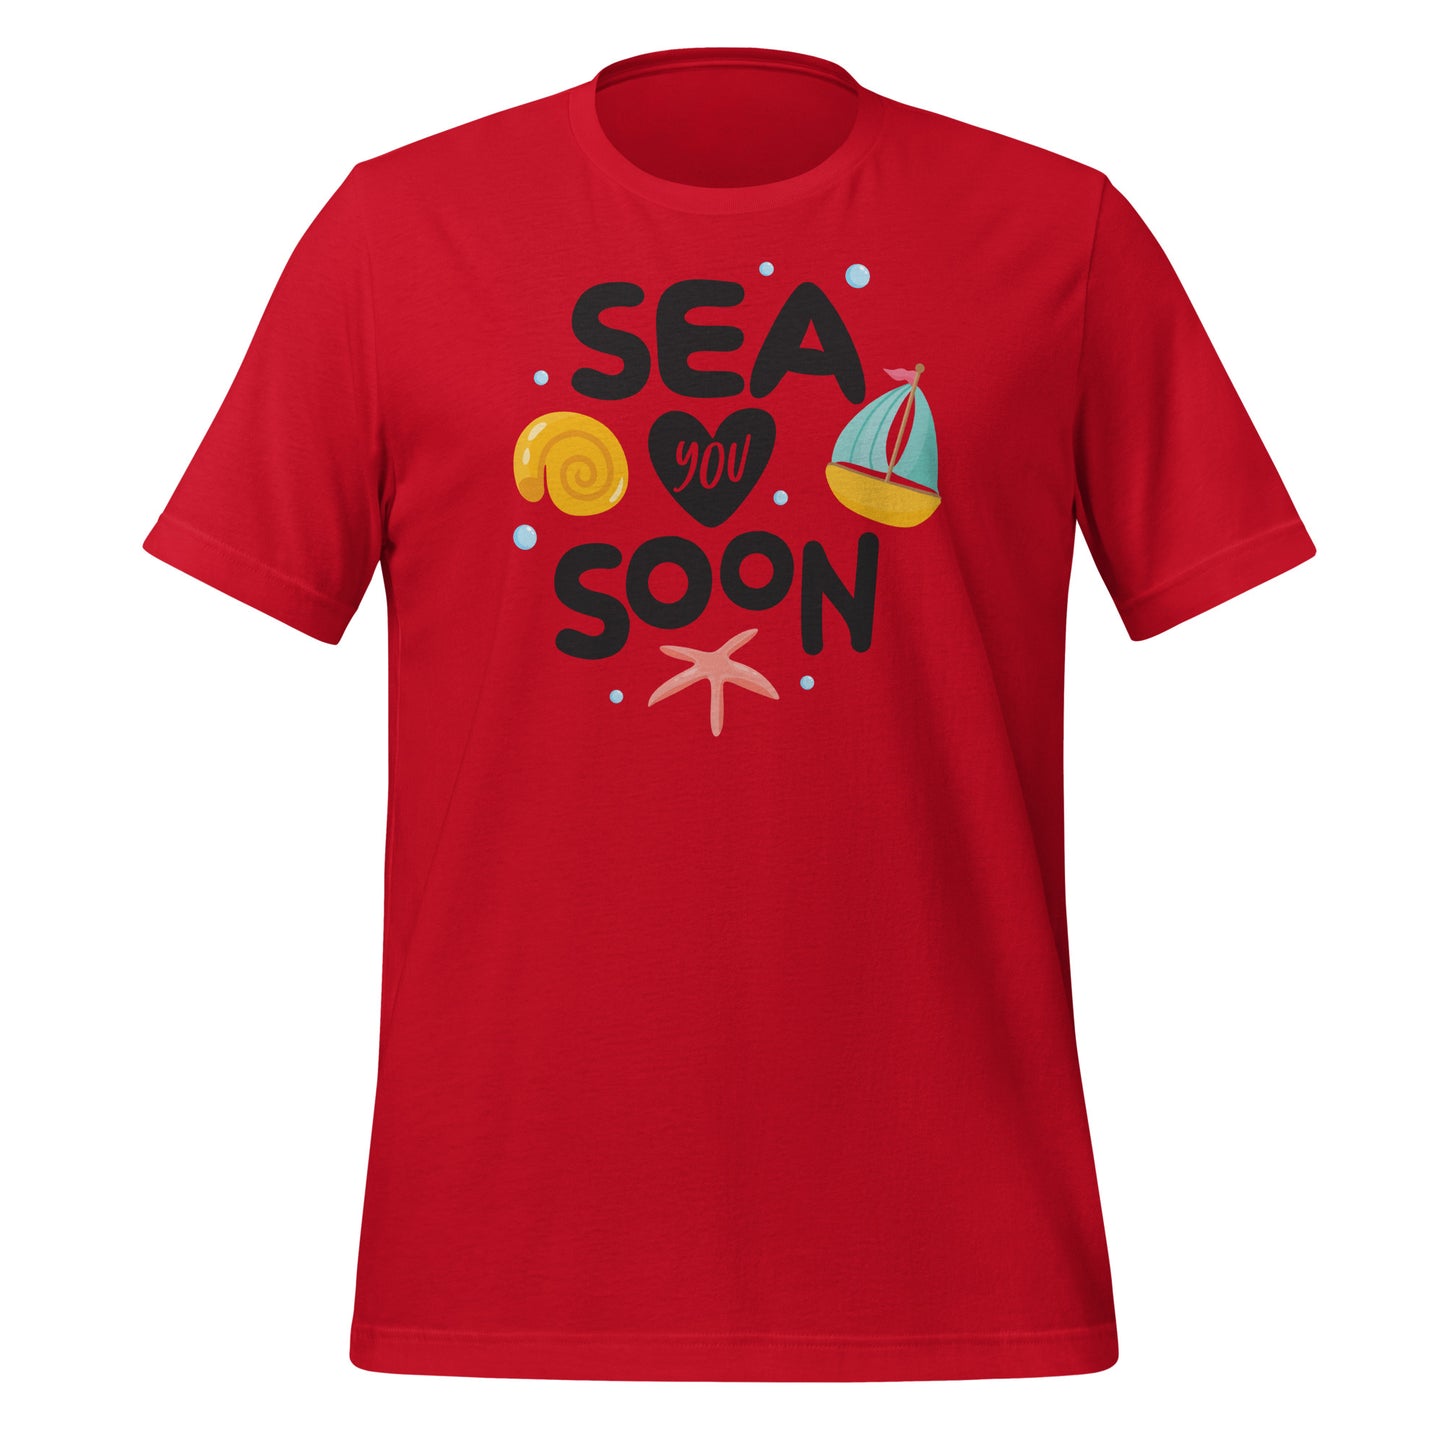 Sea You Soon: Coastal Charm Graphic Tee - Dive into Style!